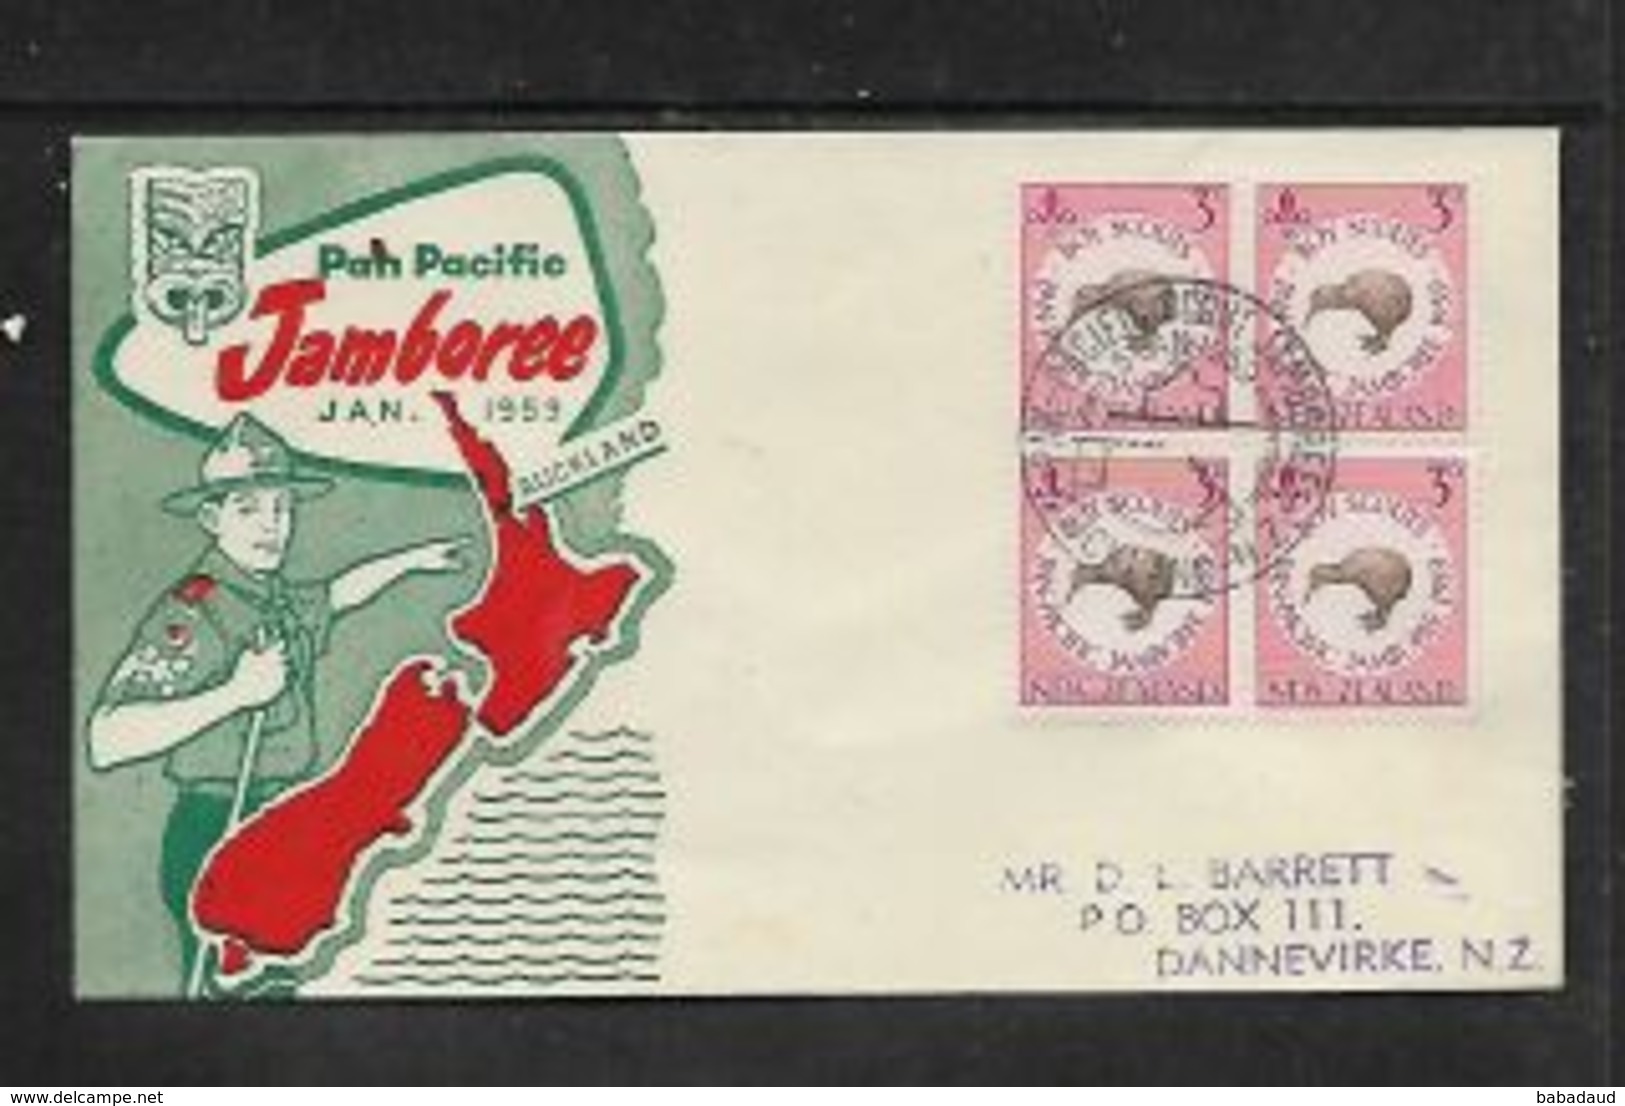 New Zealand, Boy Scouts, Pan Pacific Jamboree 1959,  FDC - FDC